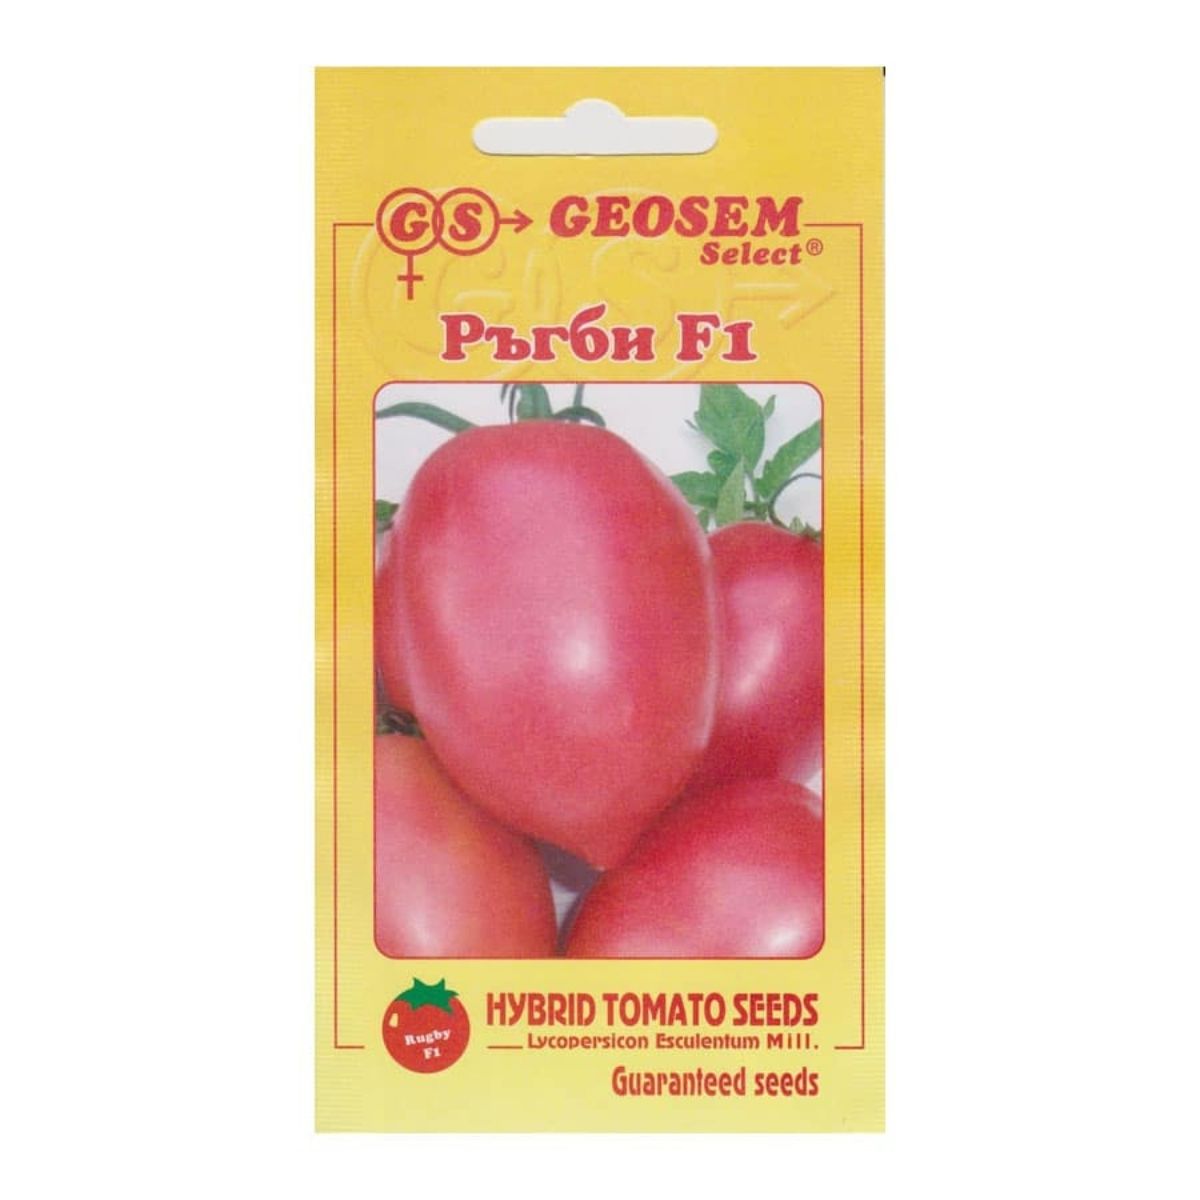 Tomate - Seminte Tomate semi-timpurii RUGBY GeosemSelect 2500 sem, hectarul.ro